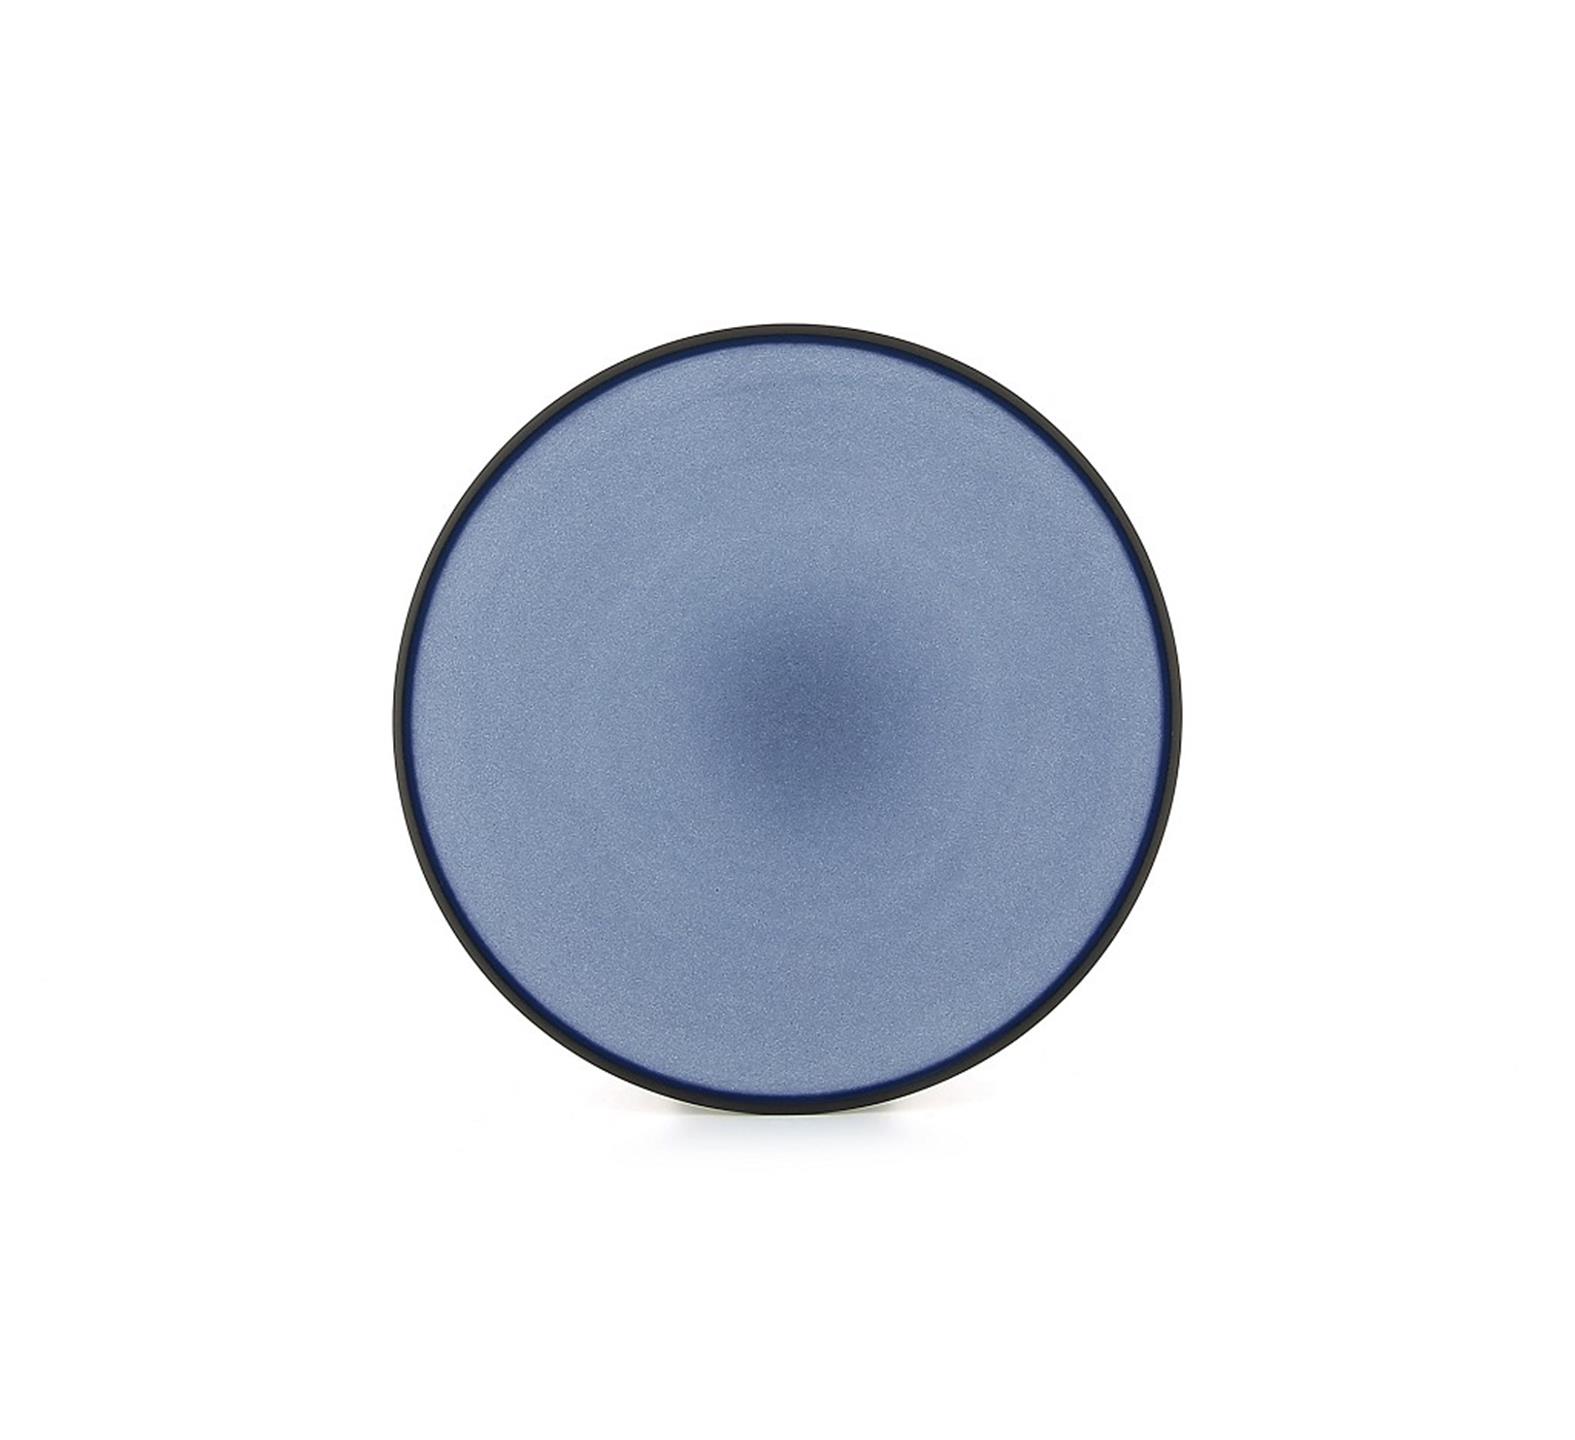 EQUINOXE CIRRUS BLUE DESSERT PLATE 21,5CM